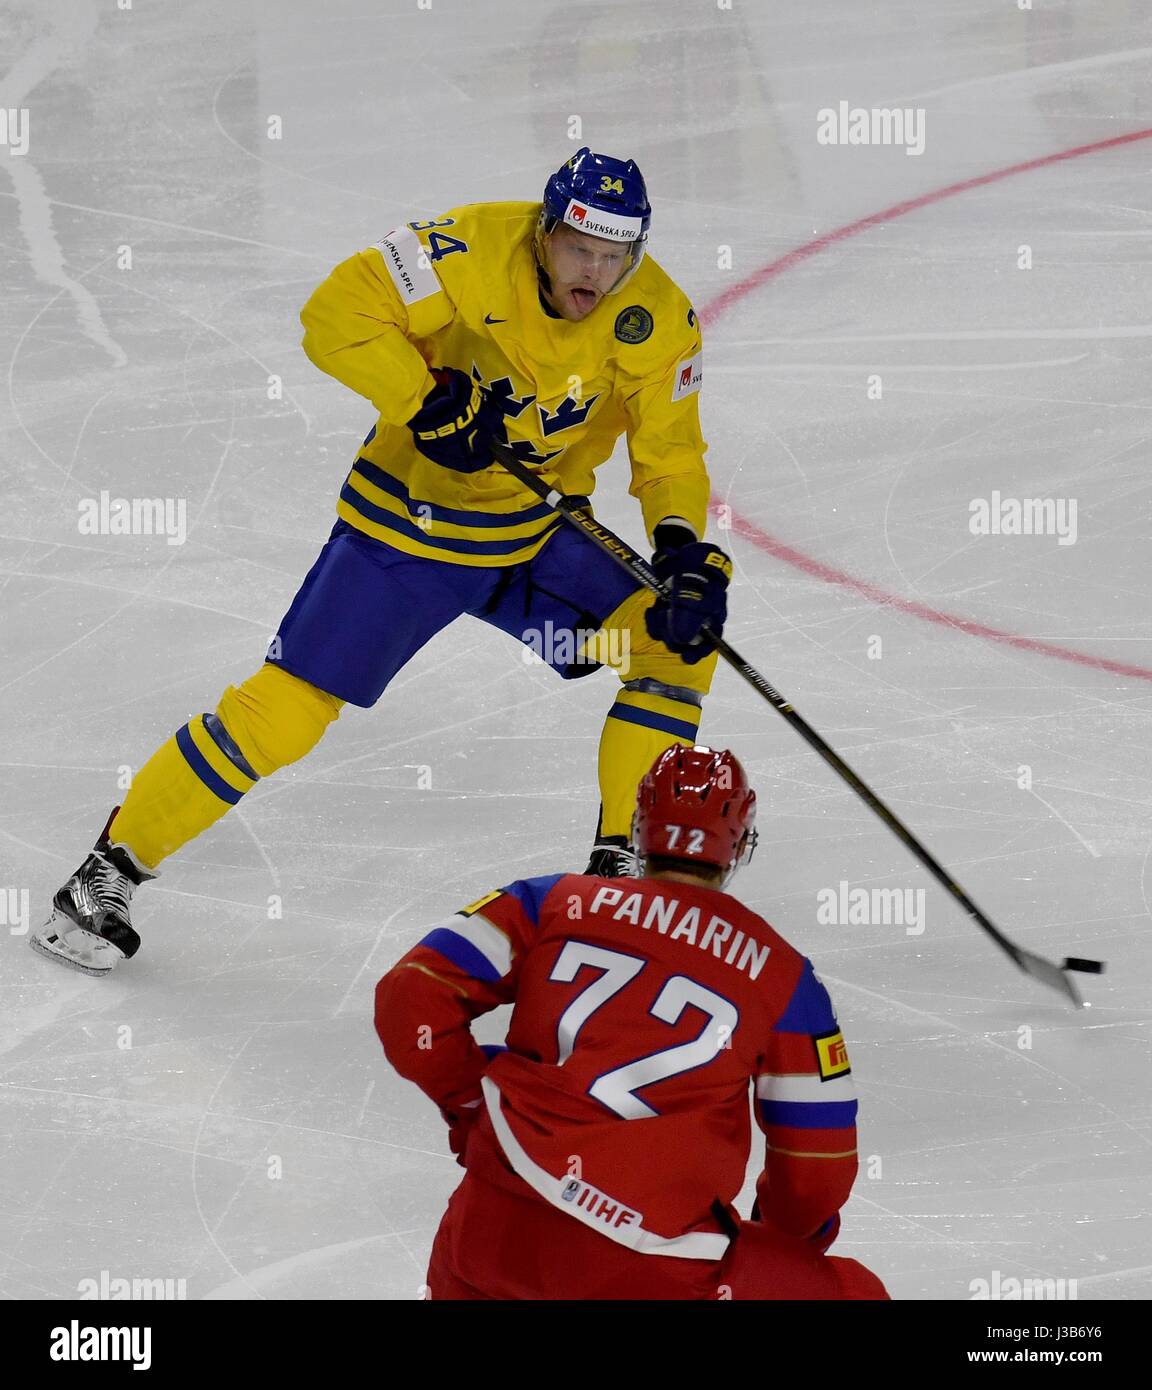 Artemi Panarin, Columbus Blue Jackets, Russian hockey player, attacker,  blue-red paint splashes, HD wallpaper